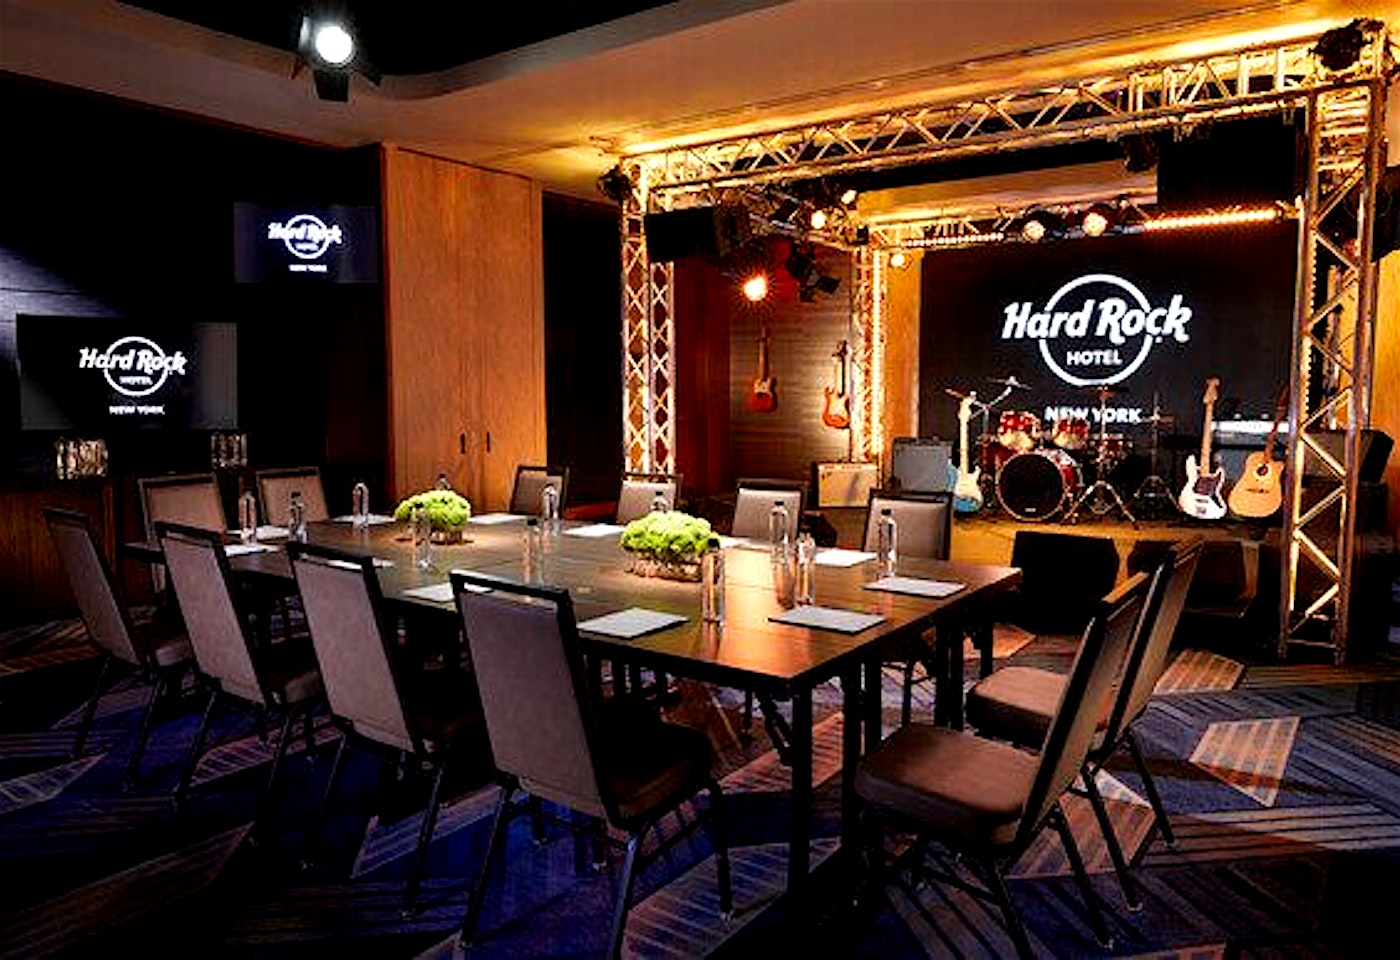 Hard Rock Hotel Meeting Rooms New York Book